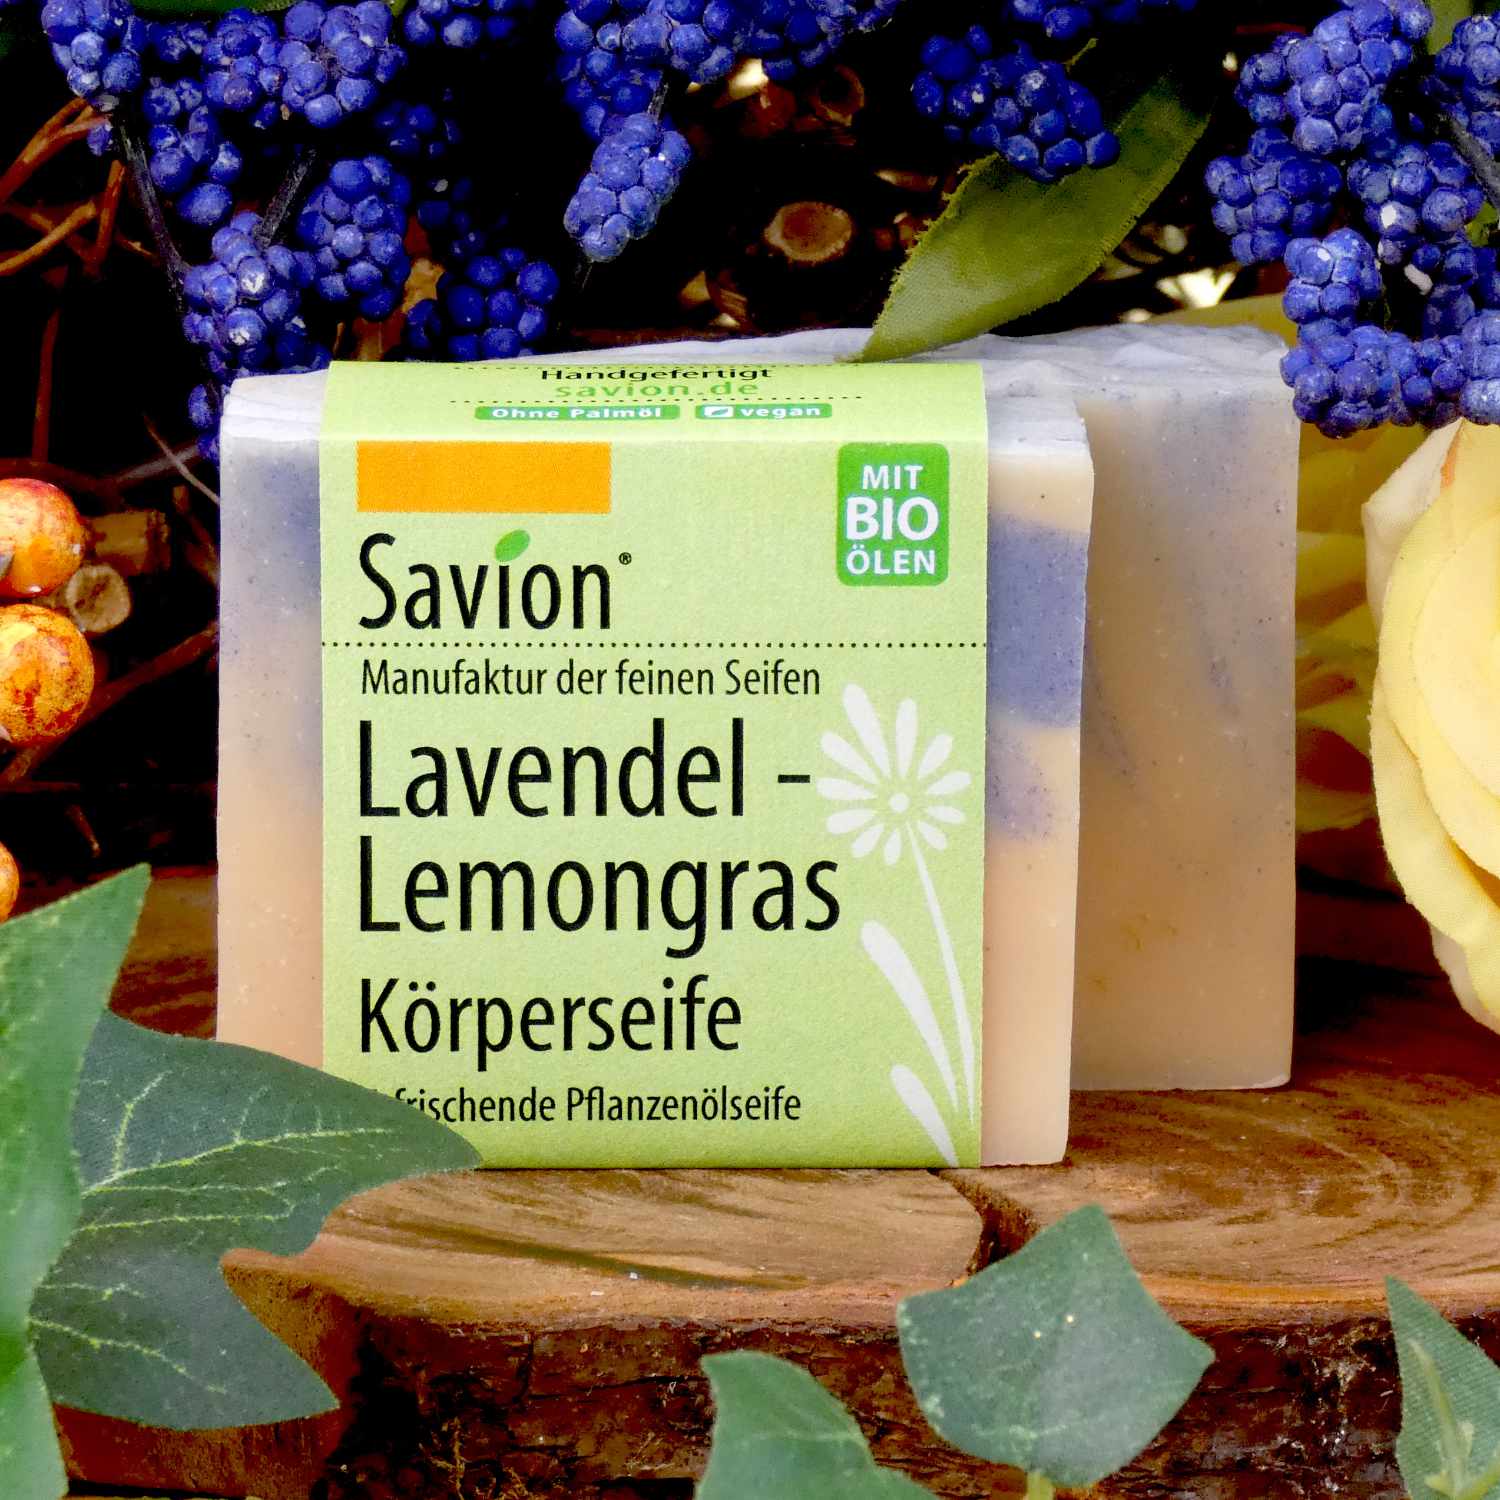 Lavendel Lemongras Seife